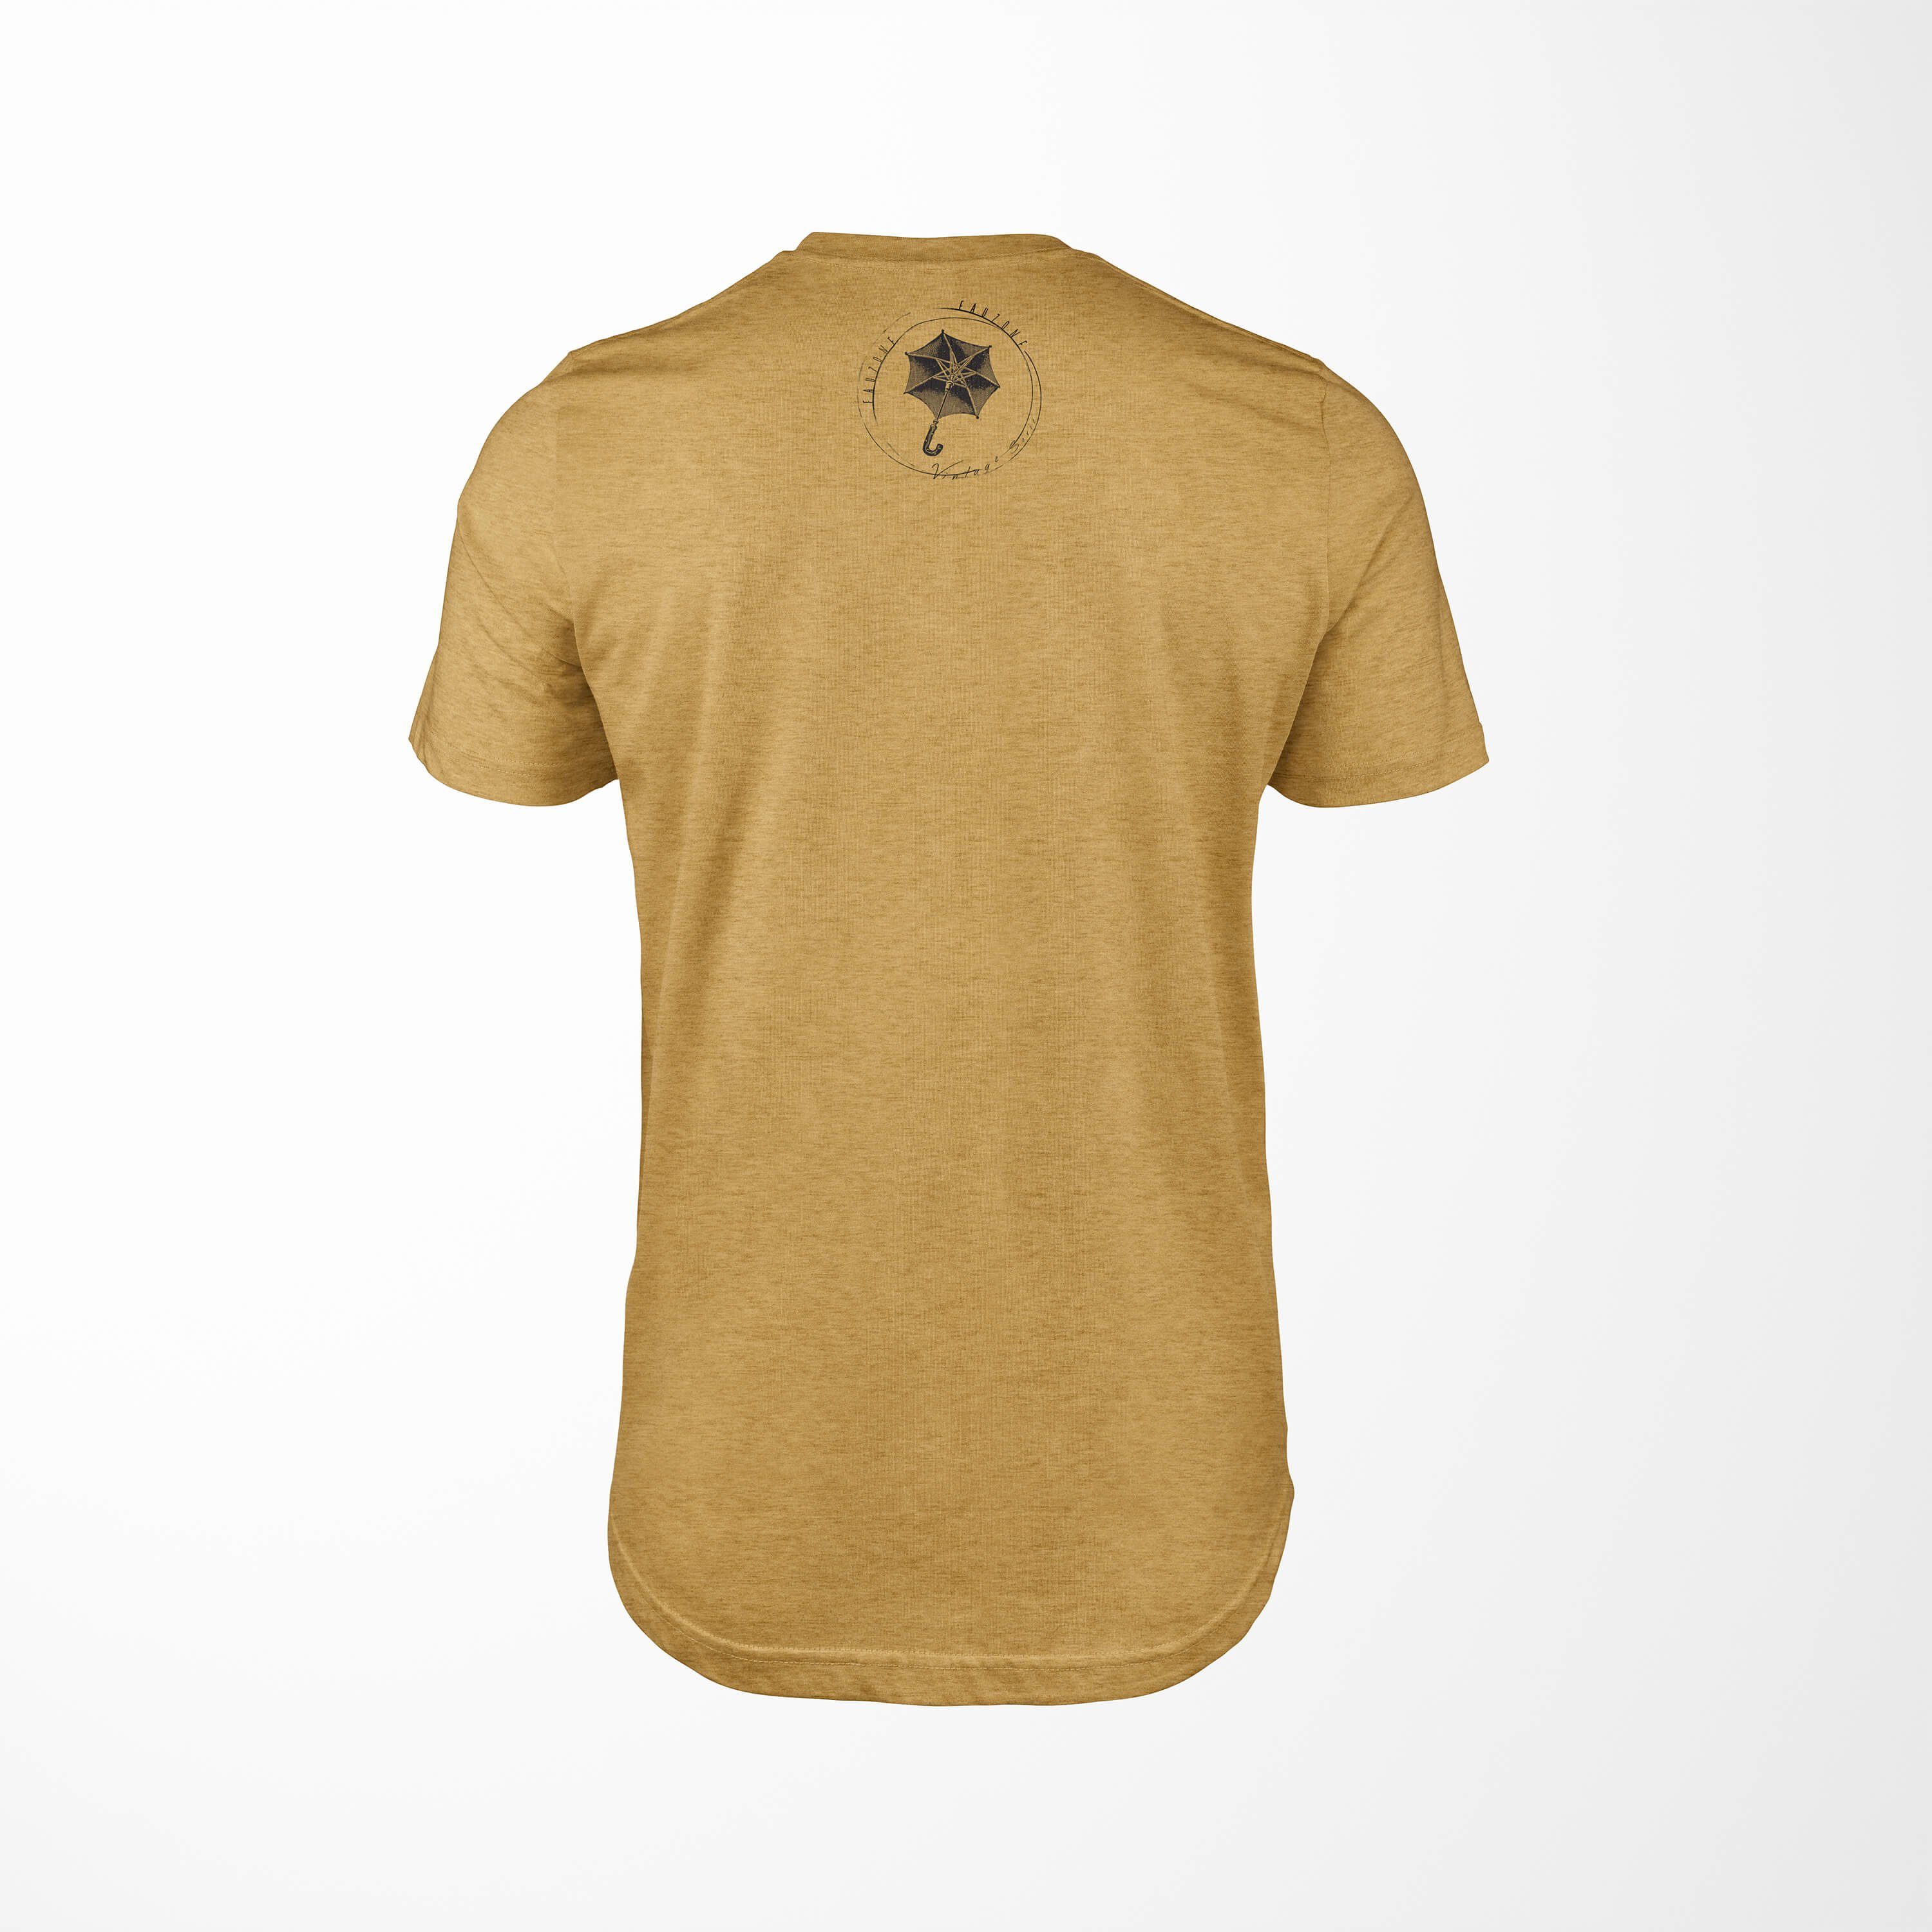 Antique Regenschirm Art Sinus Herren T-Shirt Gold T-Shirt Vintage